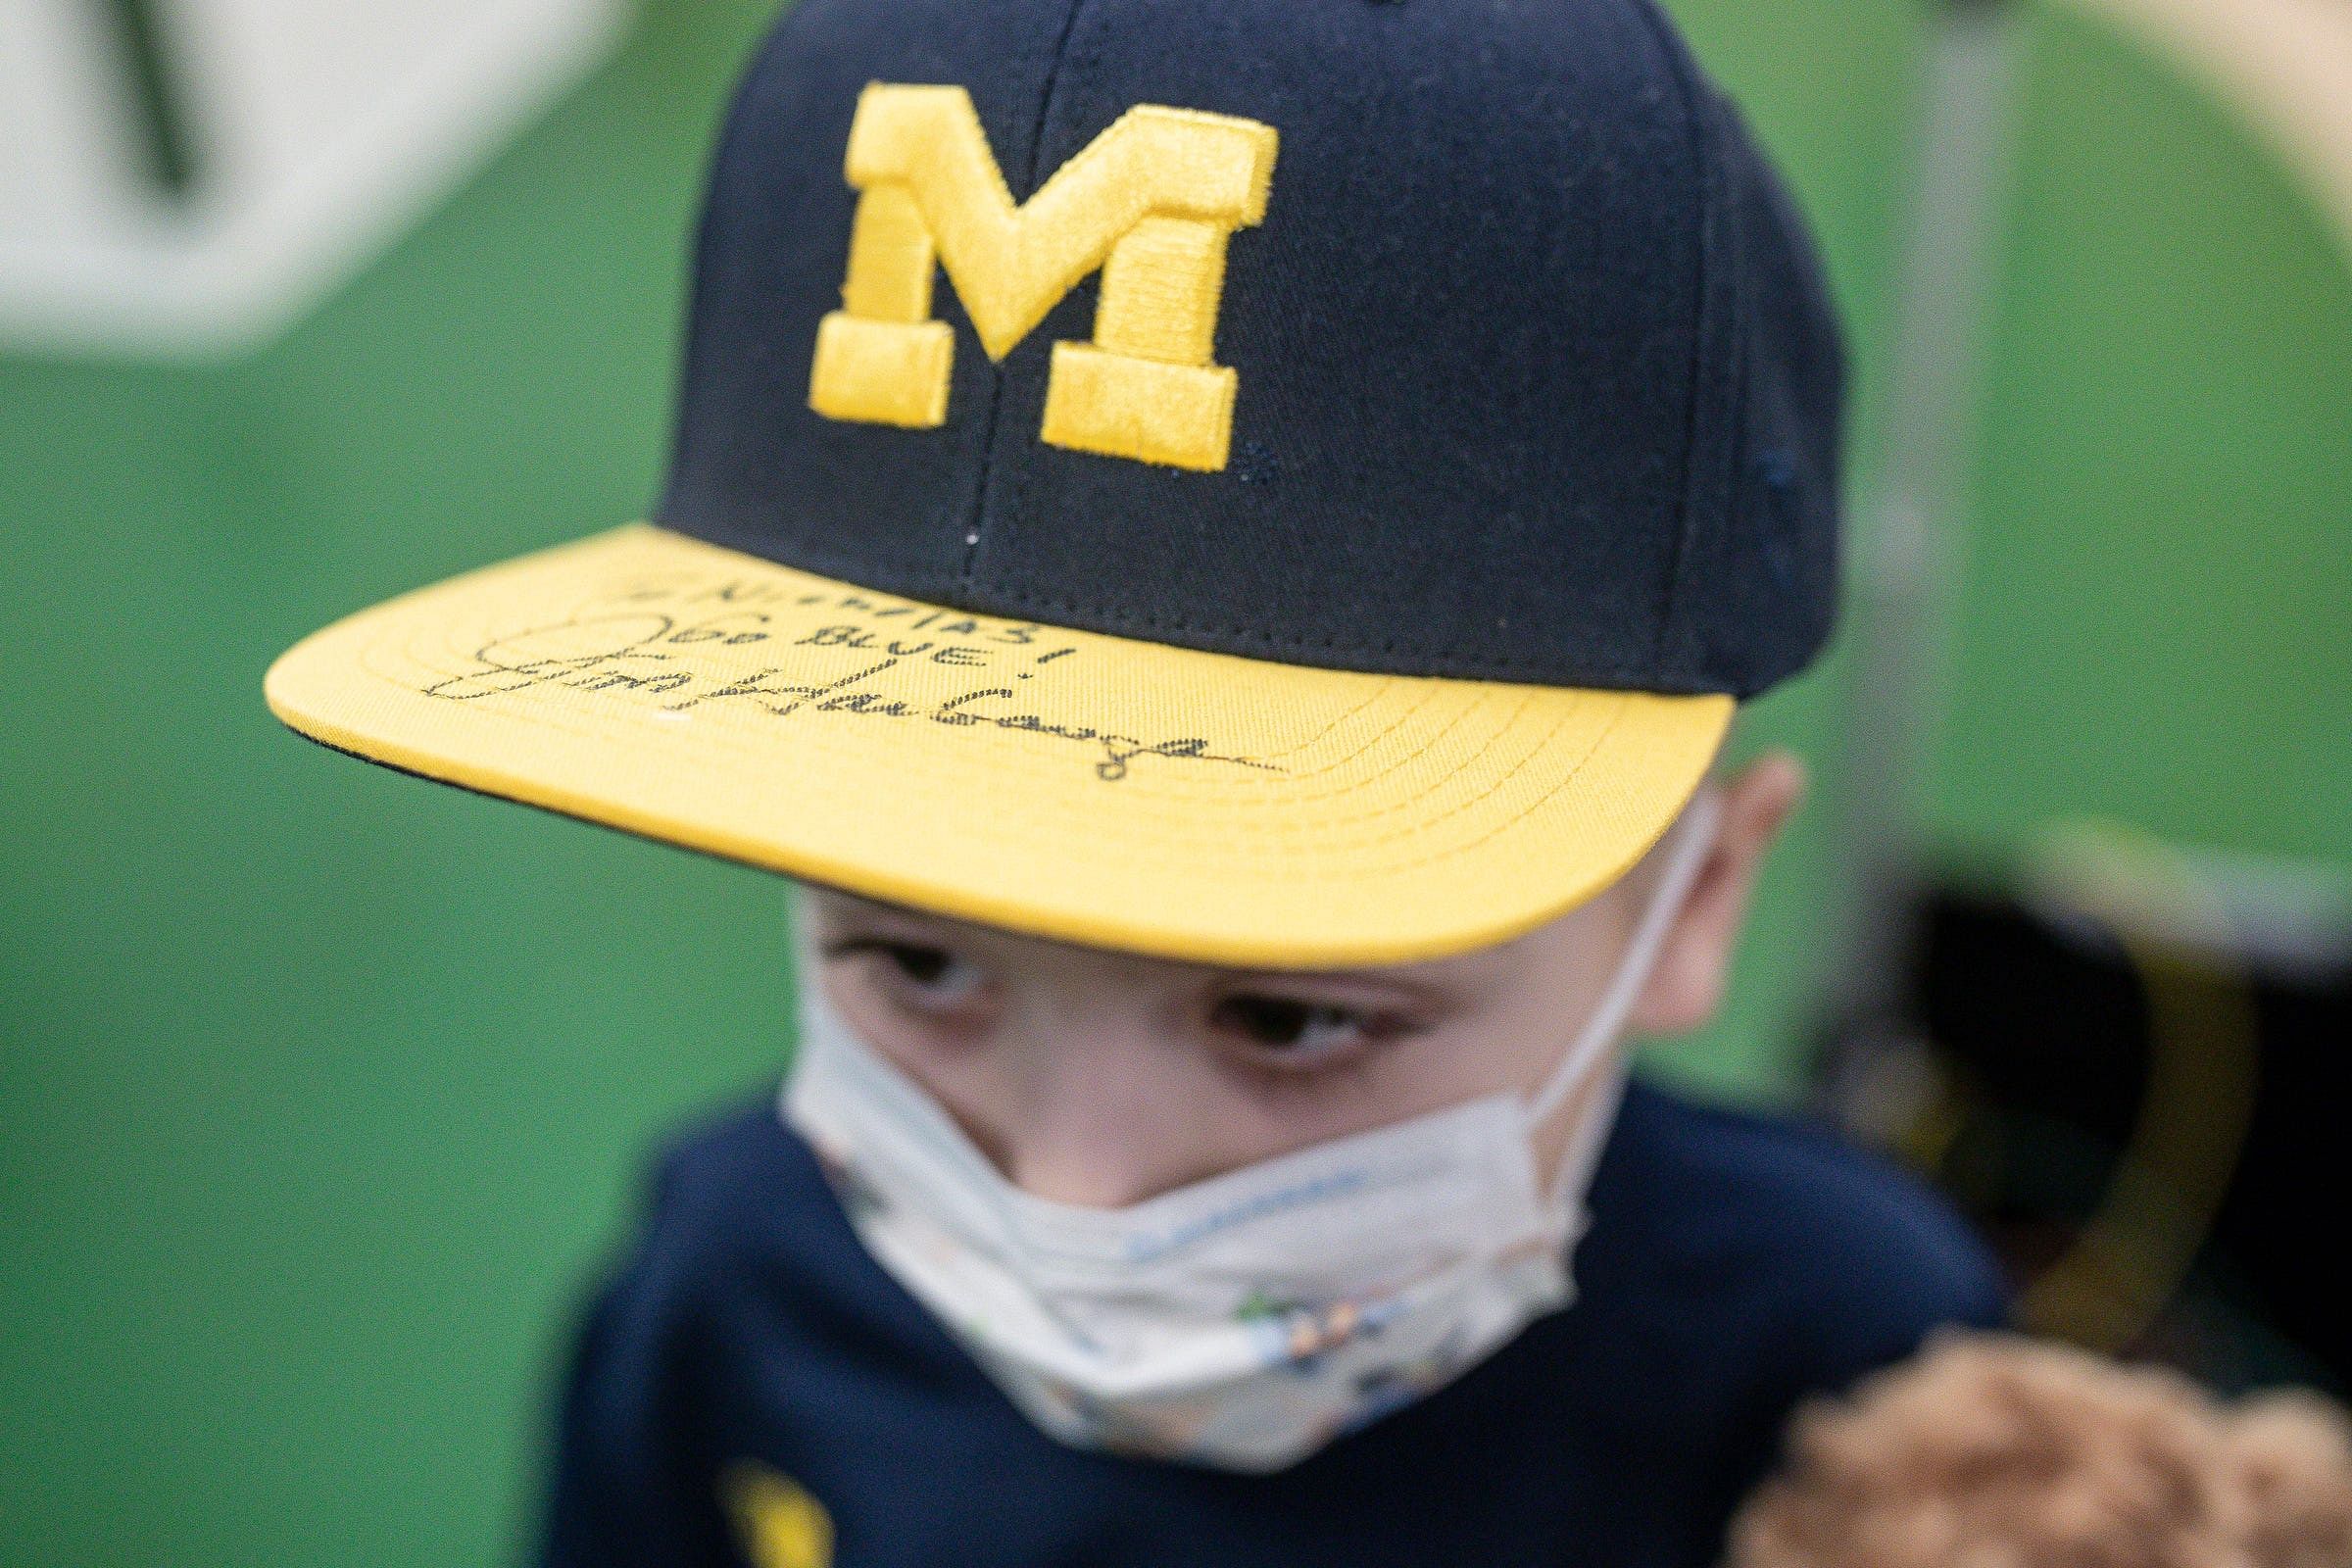 Nicholas Rinehart, 6, shows off his hat signed by Michigan head coach Jim Harbaugh.